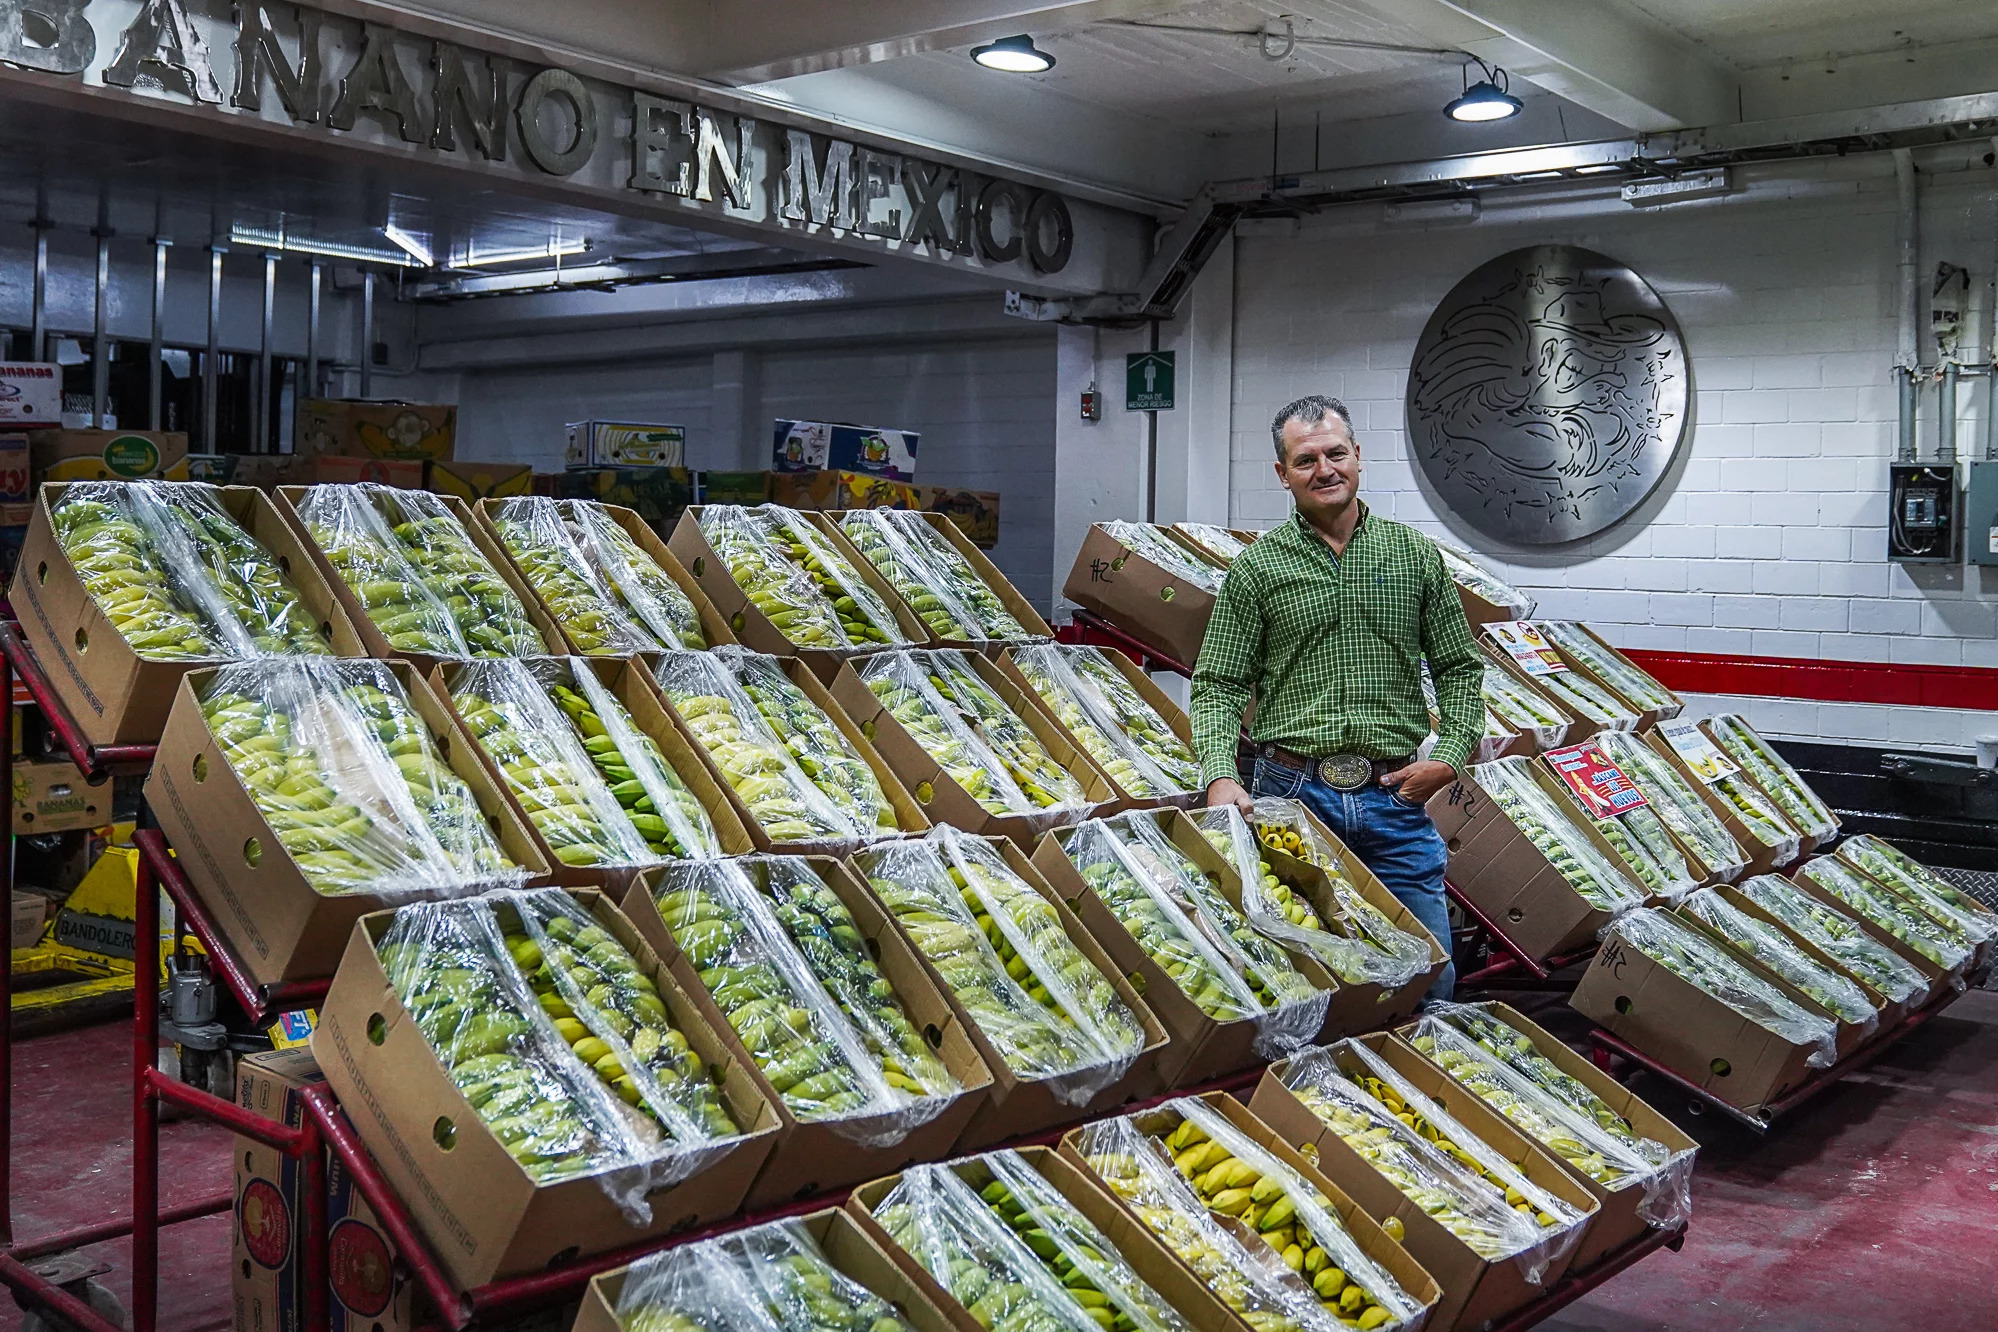 Jorge Gutiérrez poses next to crates of bananas